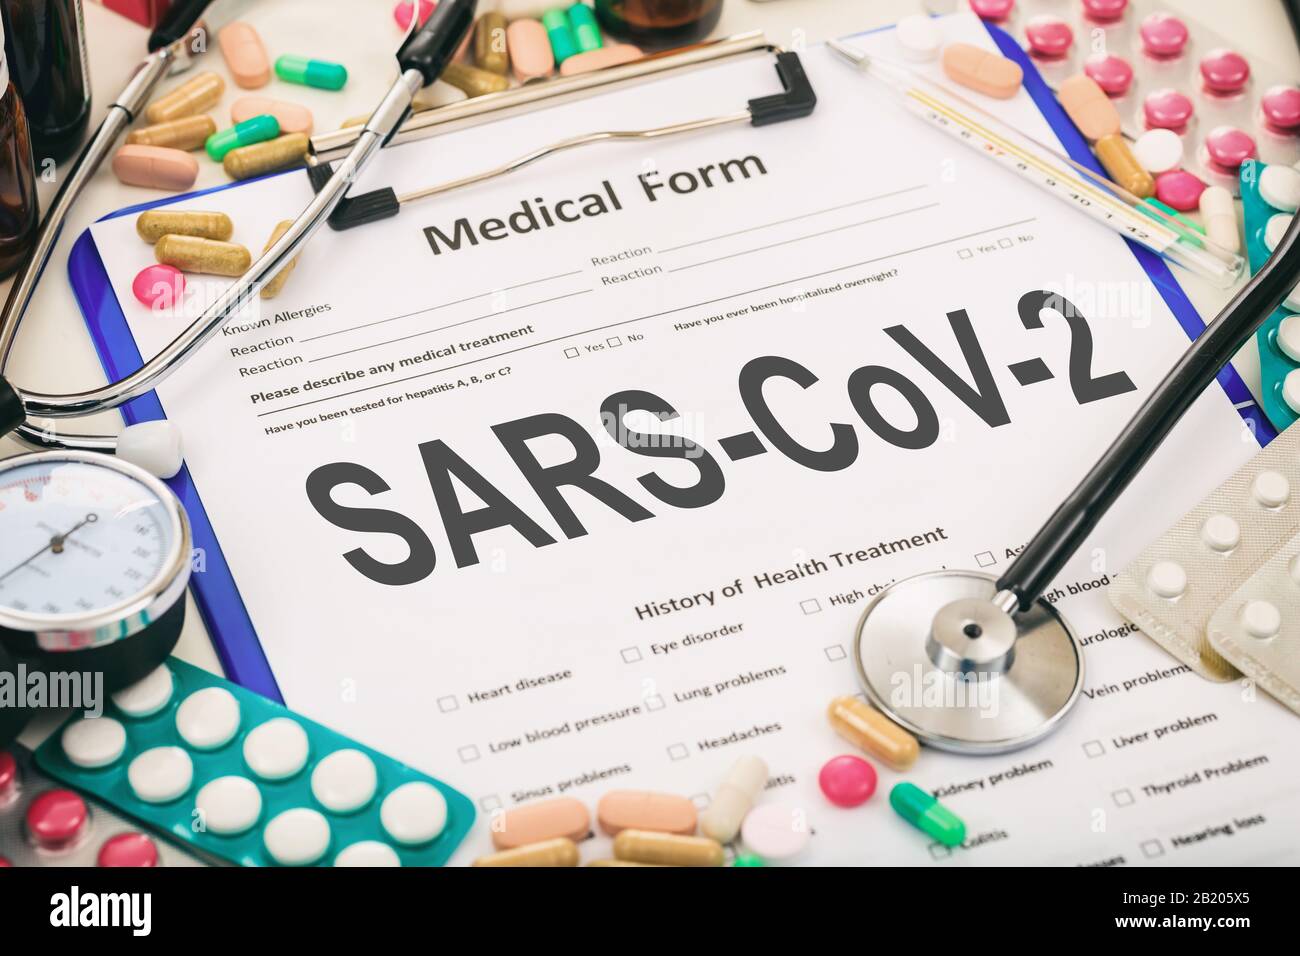 SARS CoV2. Medical form, diagnosis coronavirus flu, pandemic virus infection concept. 3d illustration Stock Photo